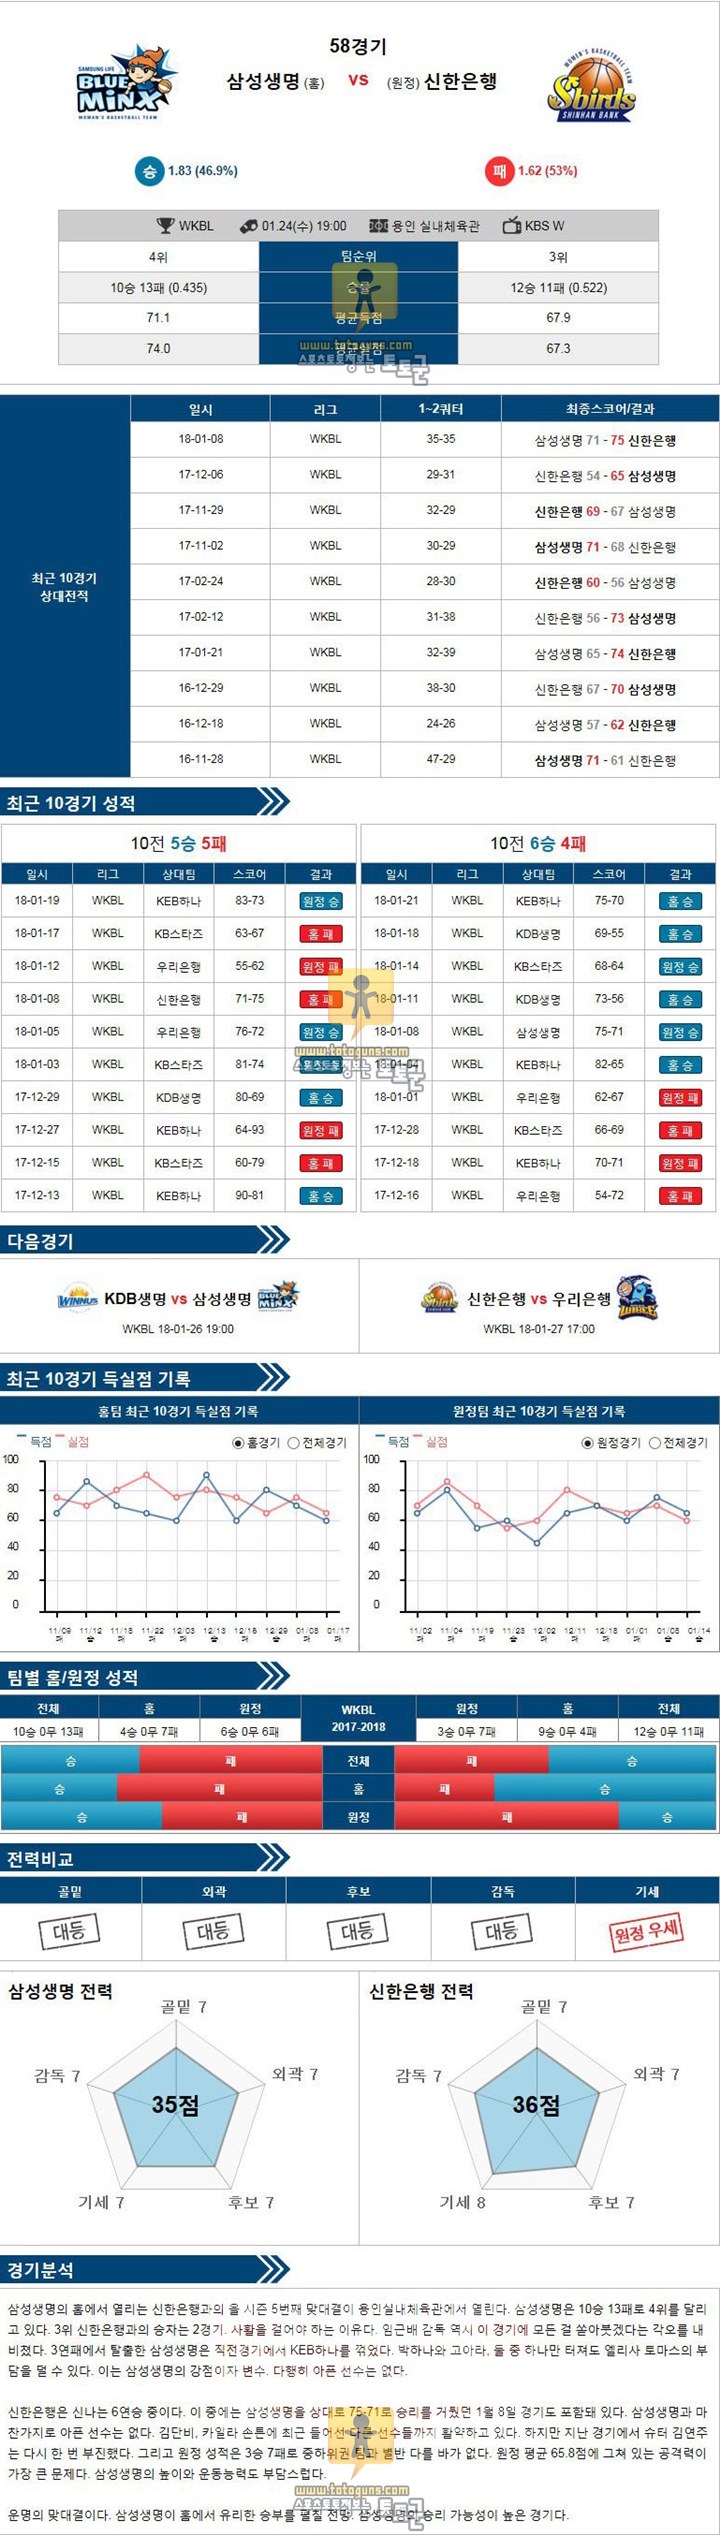 [WKBL] 1월 24일 19:00 여자농구분석 삼성생명 vs 신한은행